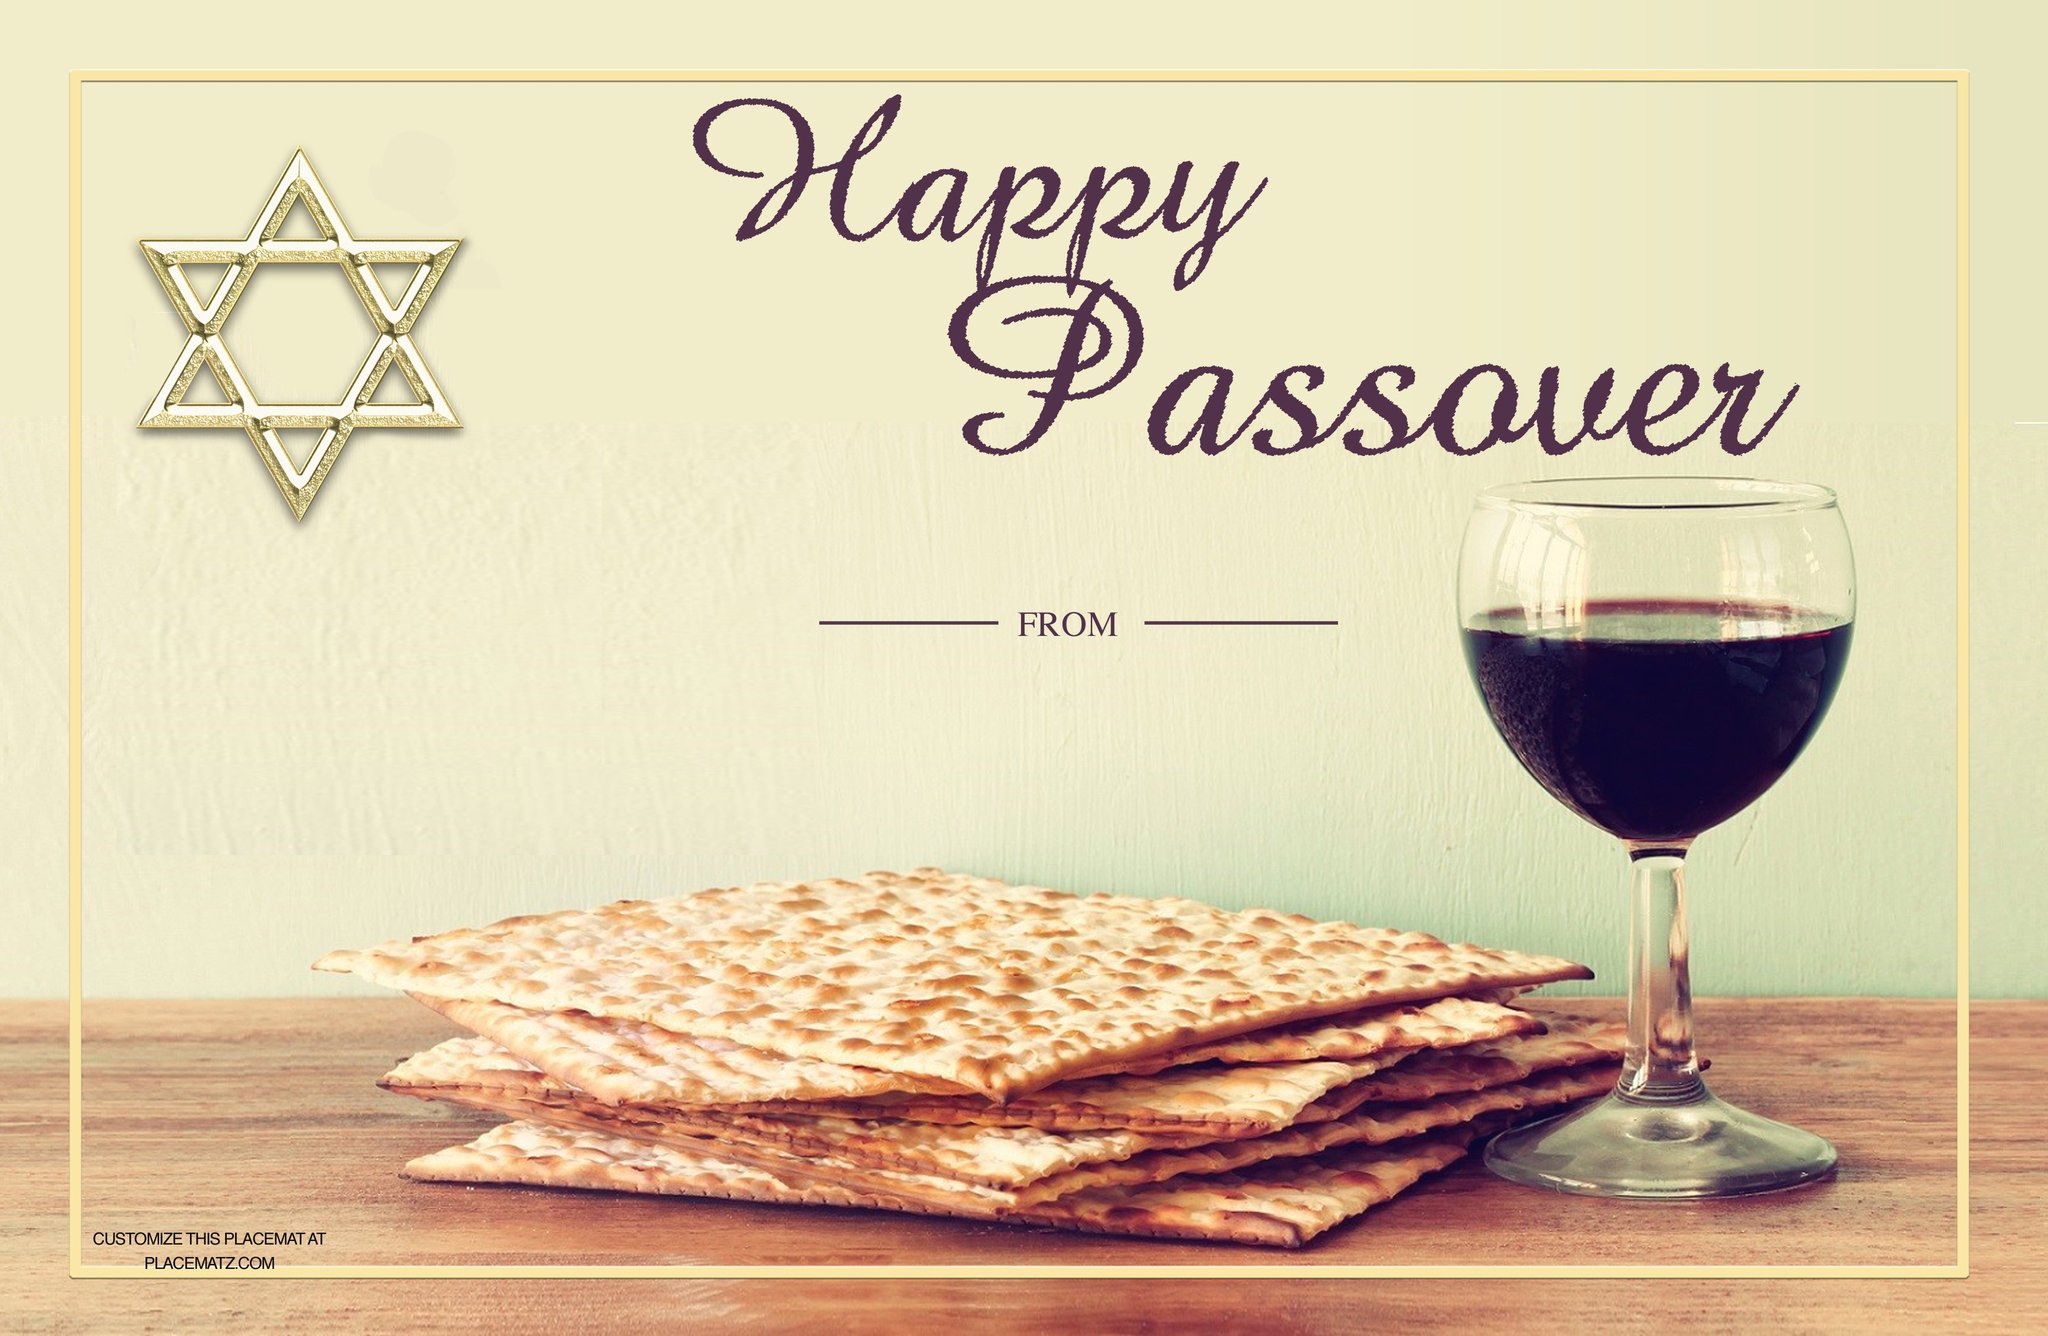 Passover Photos For Facebook